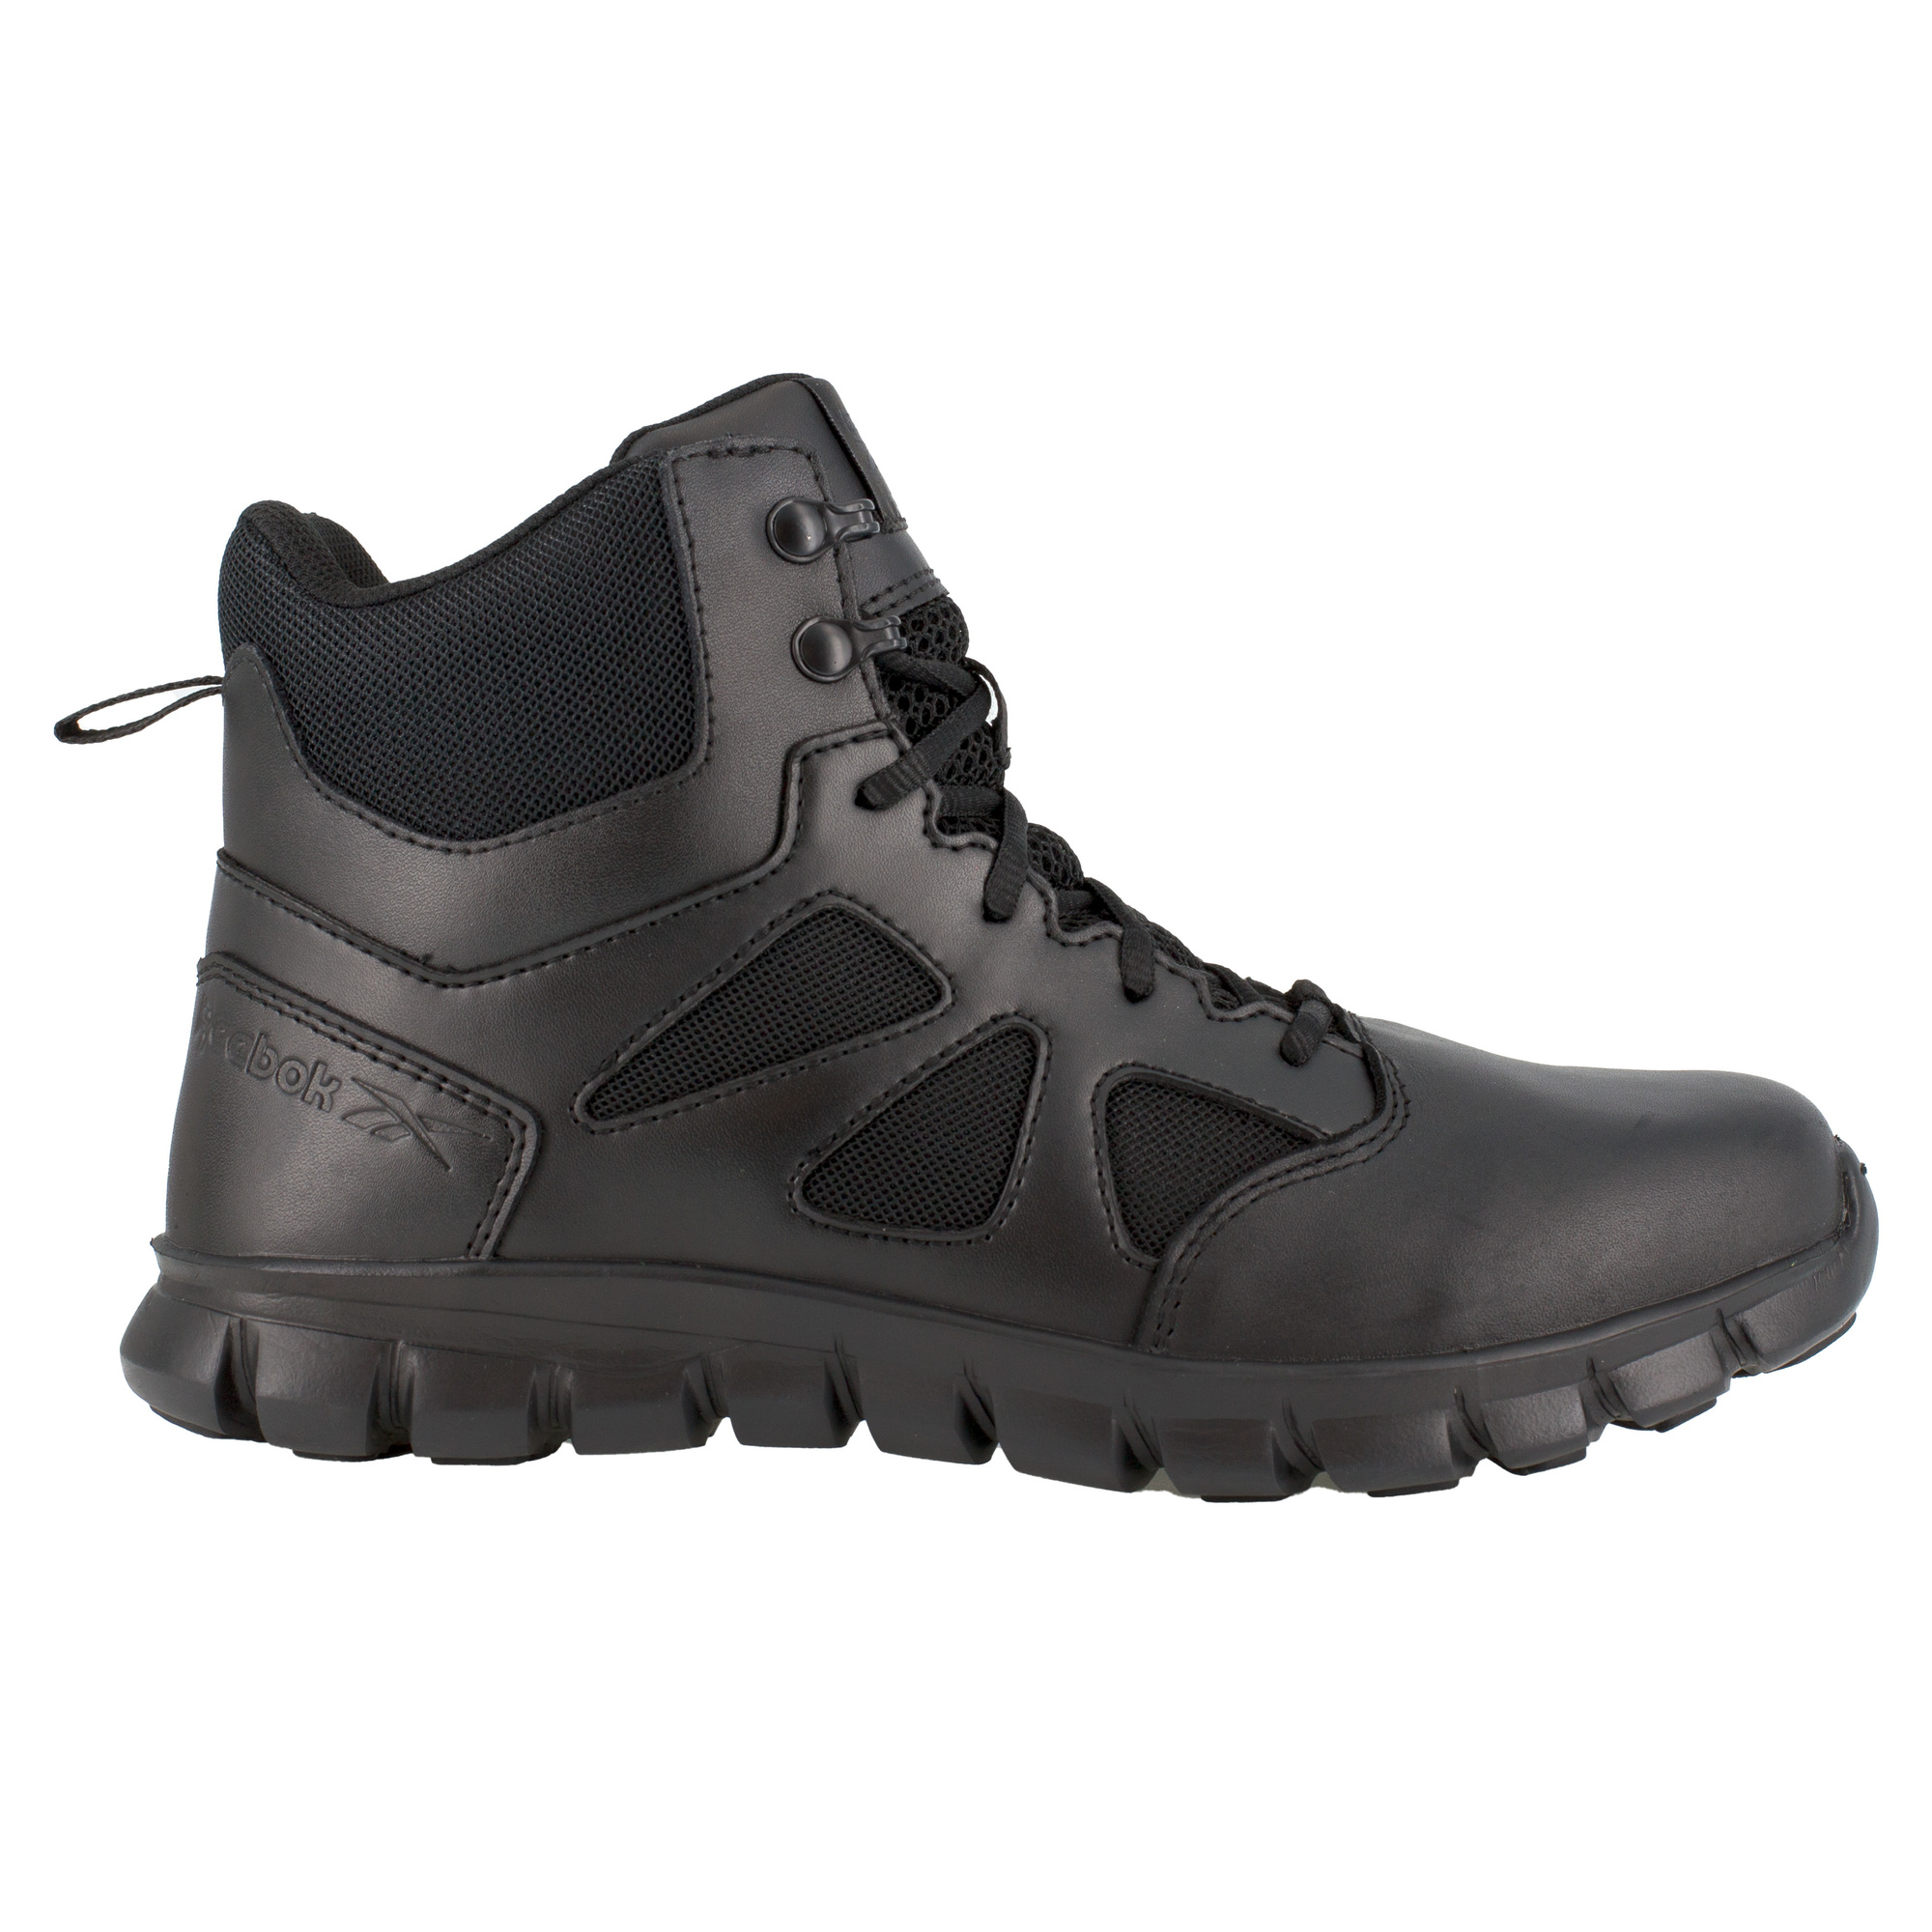 Reebok, 6Inch Tactical Boot w/Side Zipper, Size 8 1/2, Width Medium, Color Black, Model RB086